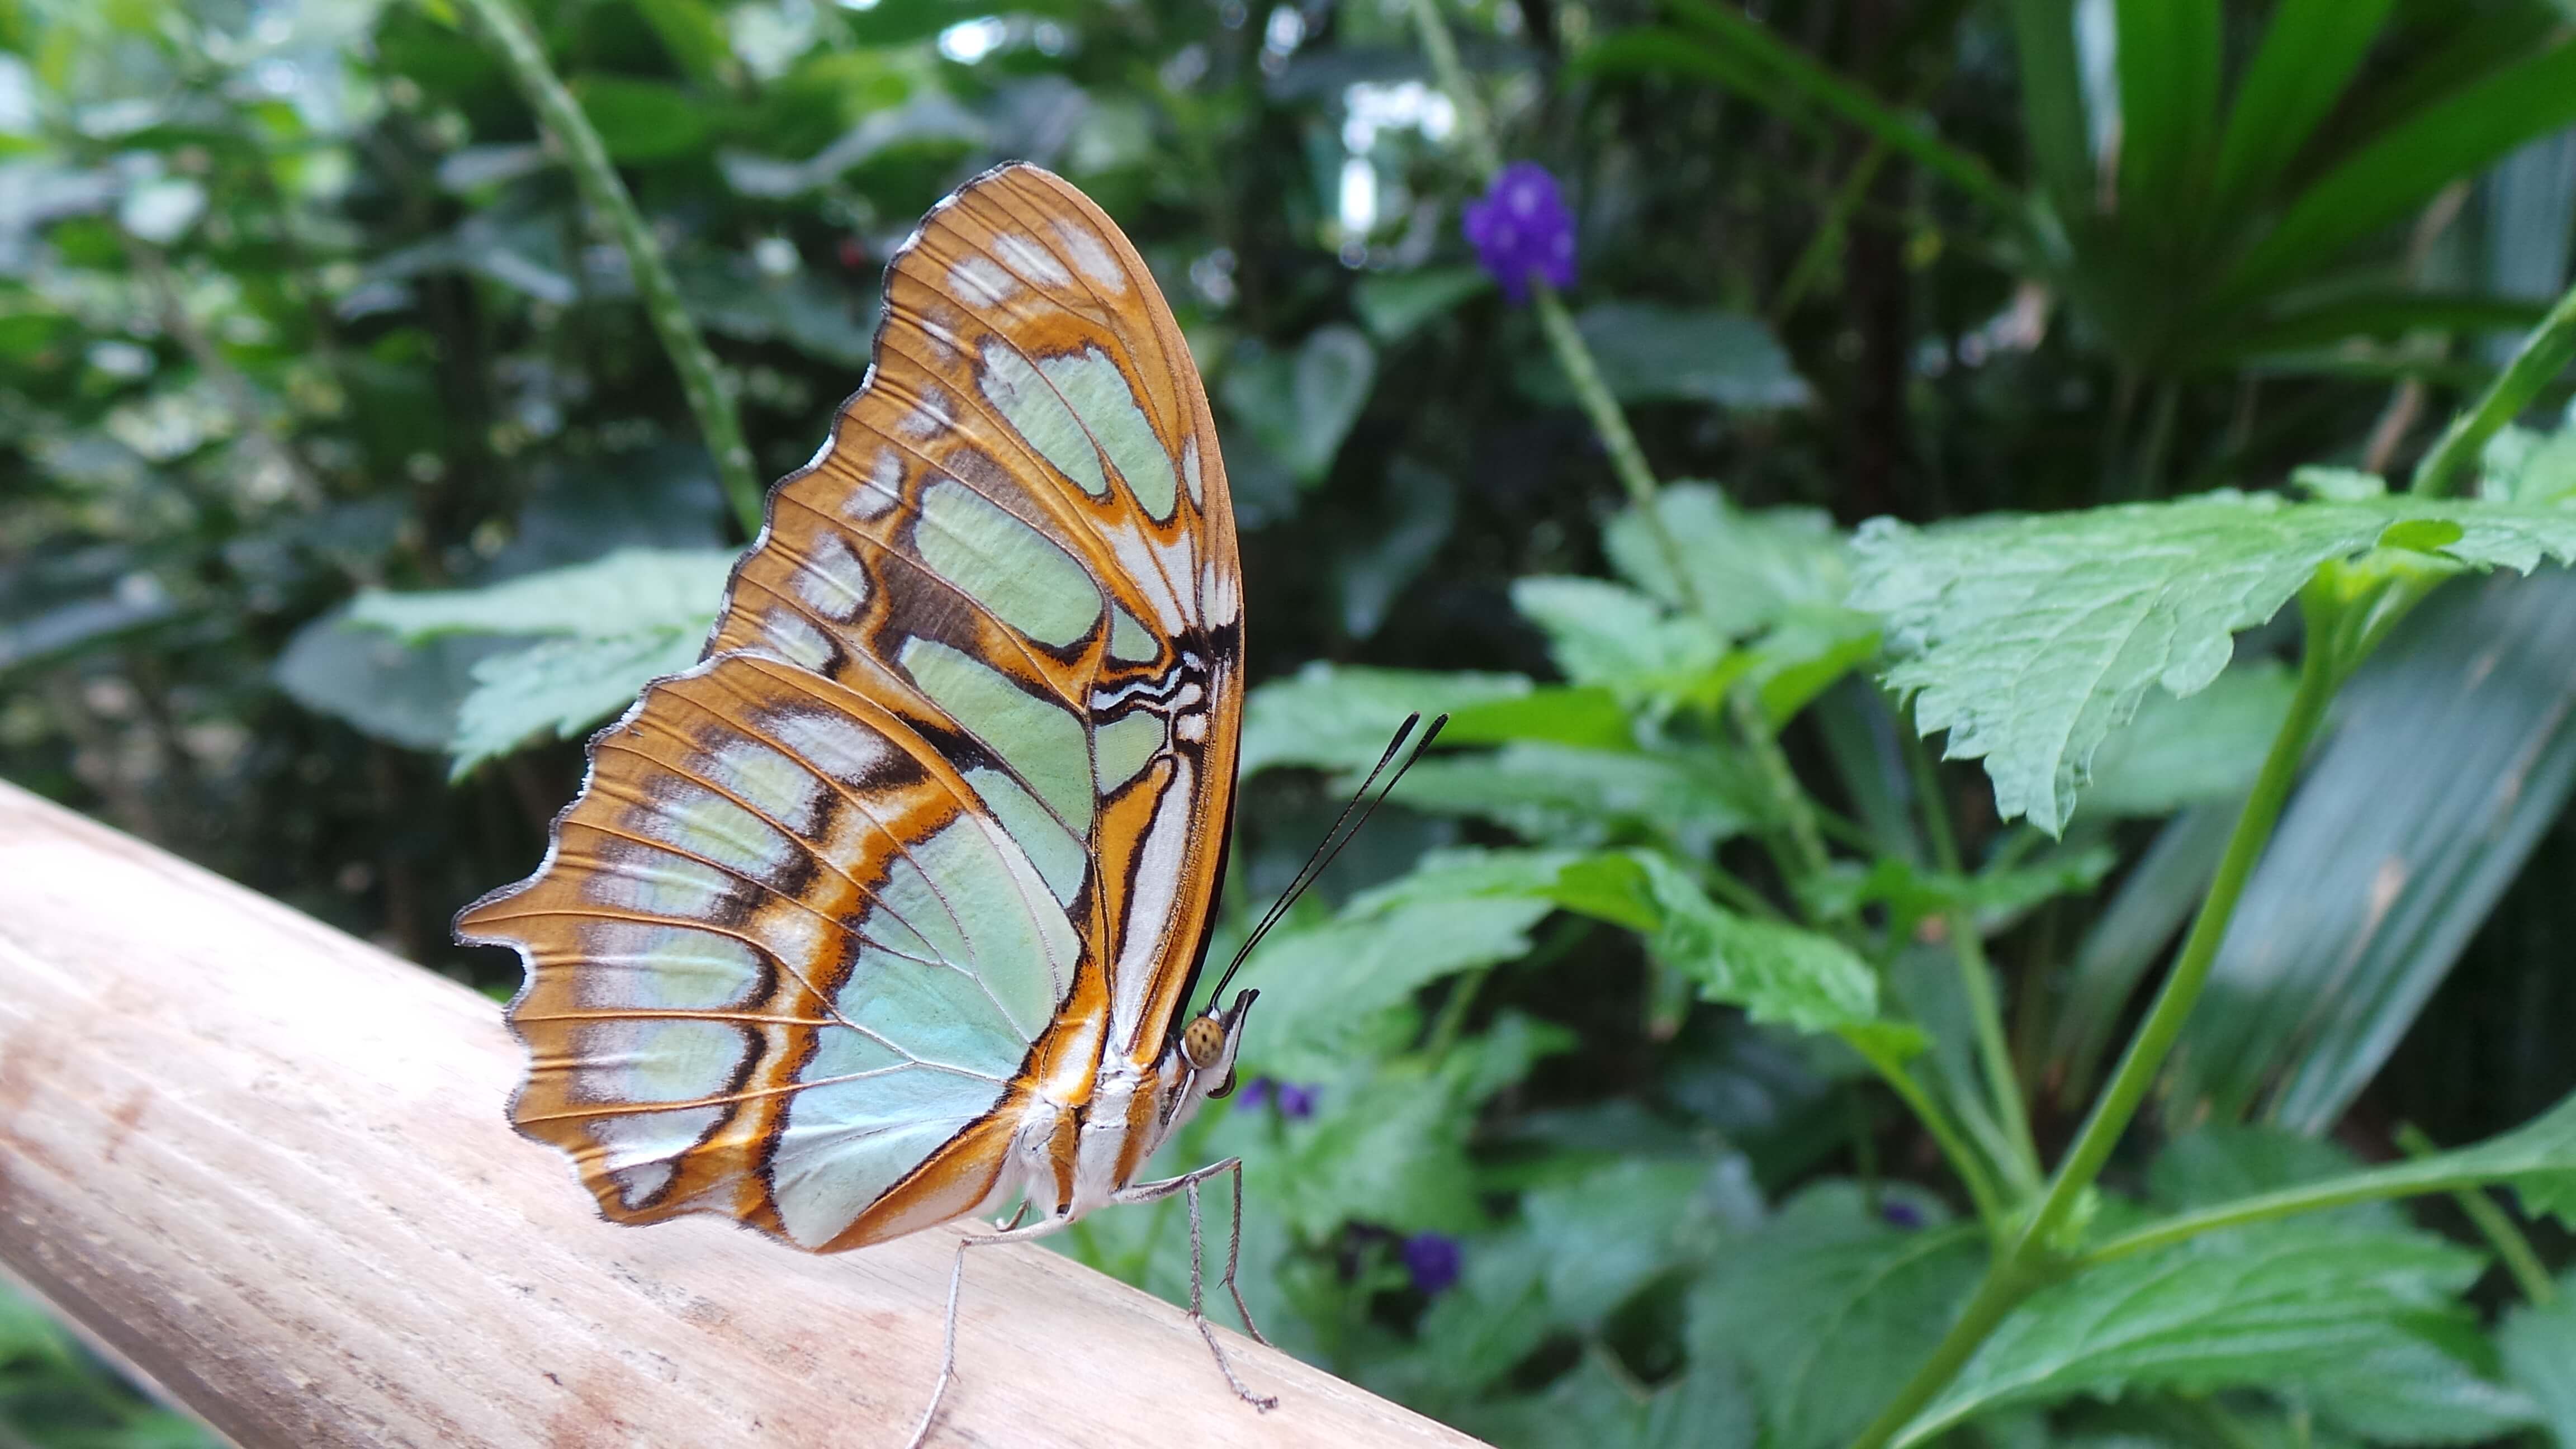 safari park san diego butterfly exhibit